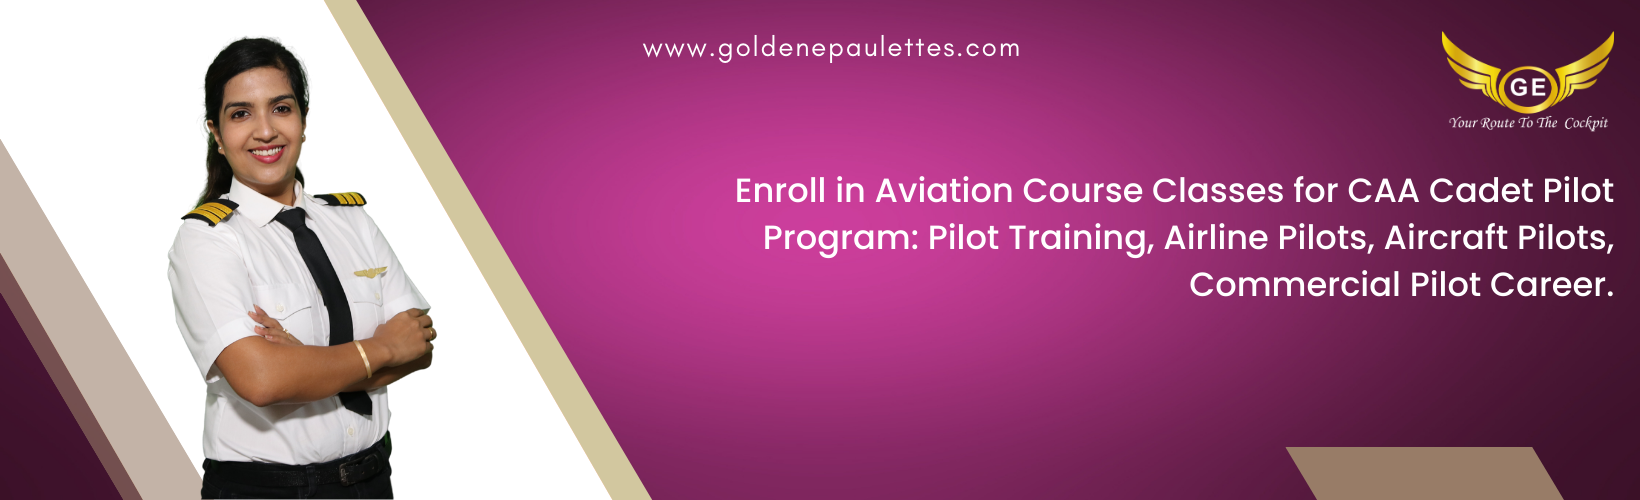 Aviation Course Classes for the CAA Cadet Pilot Program